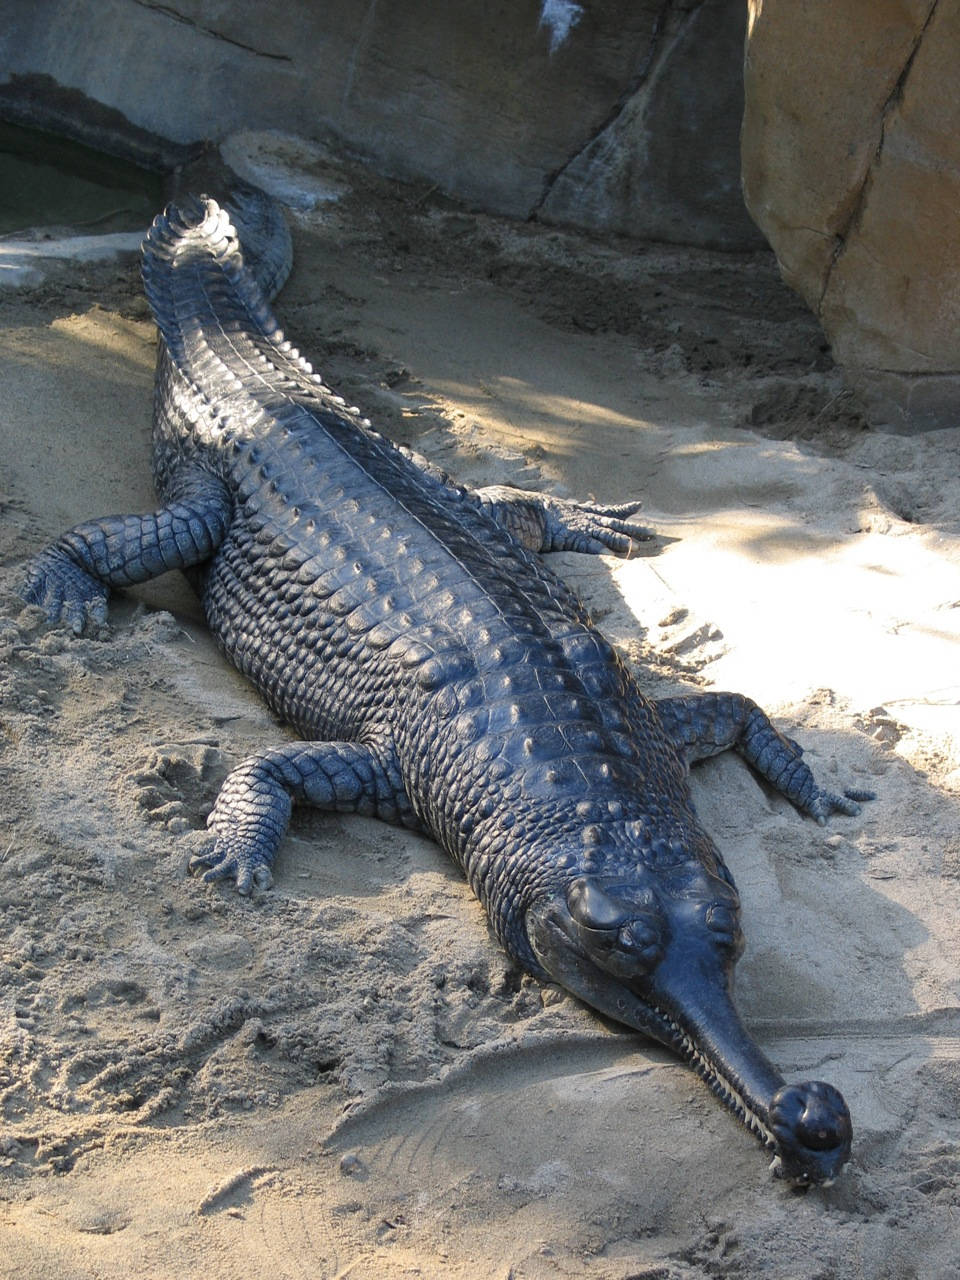 Gavial Crocodile Sleeping Nature Photography Wallpaper